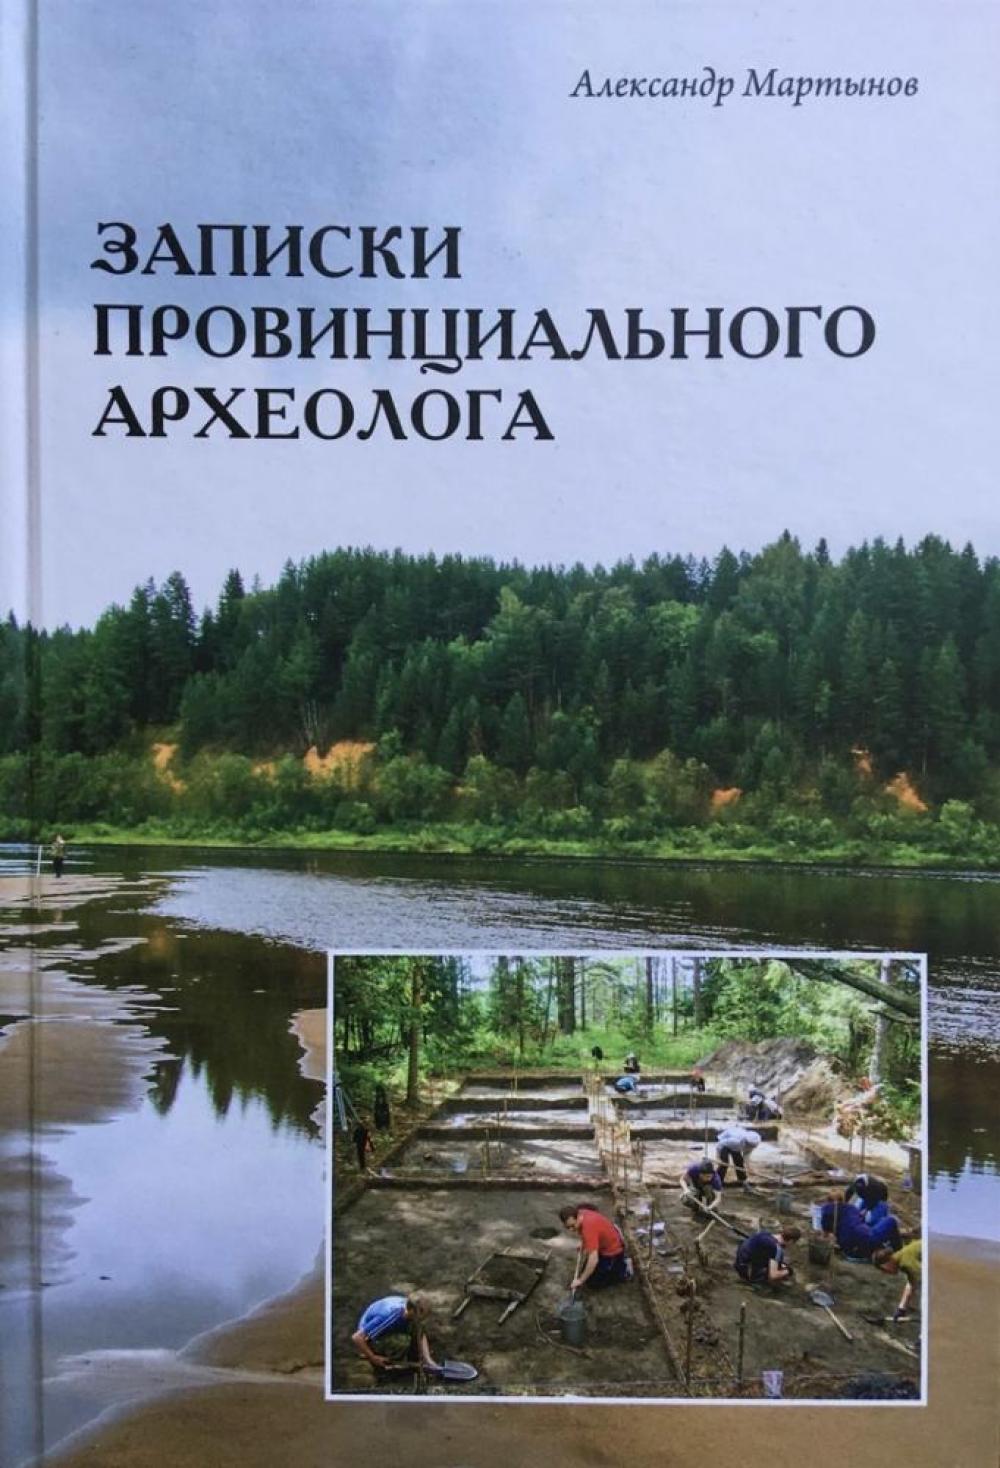 Обложка книги "Записки провинциального археолога"